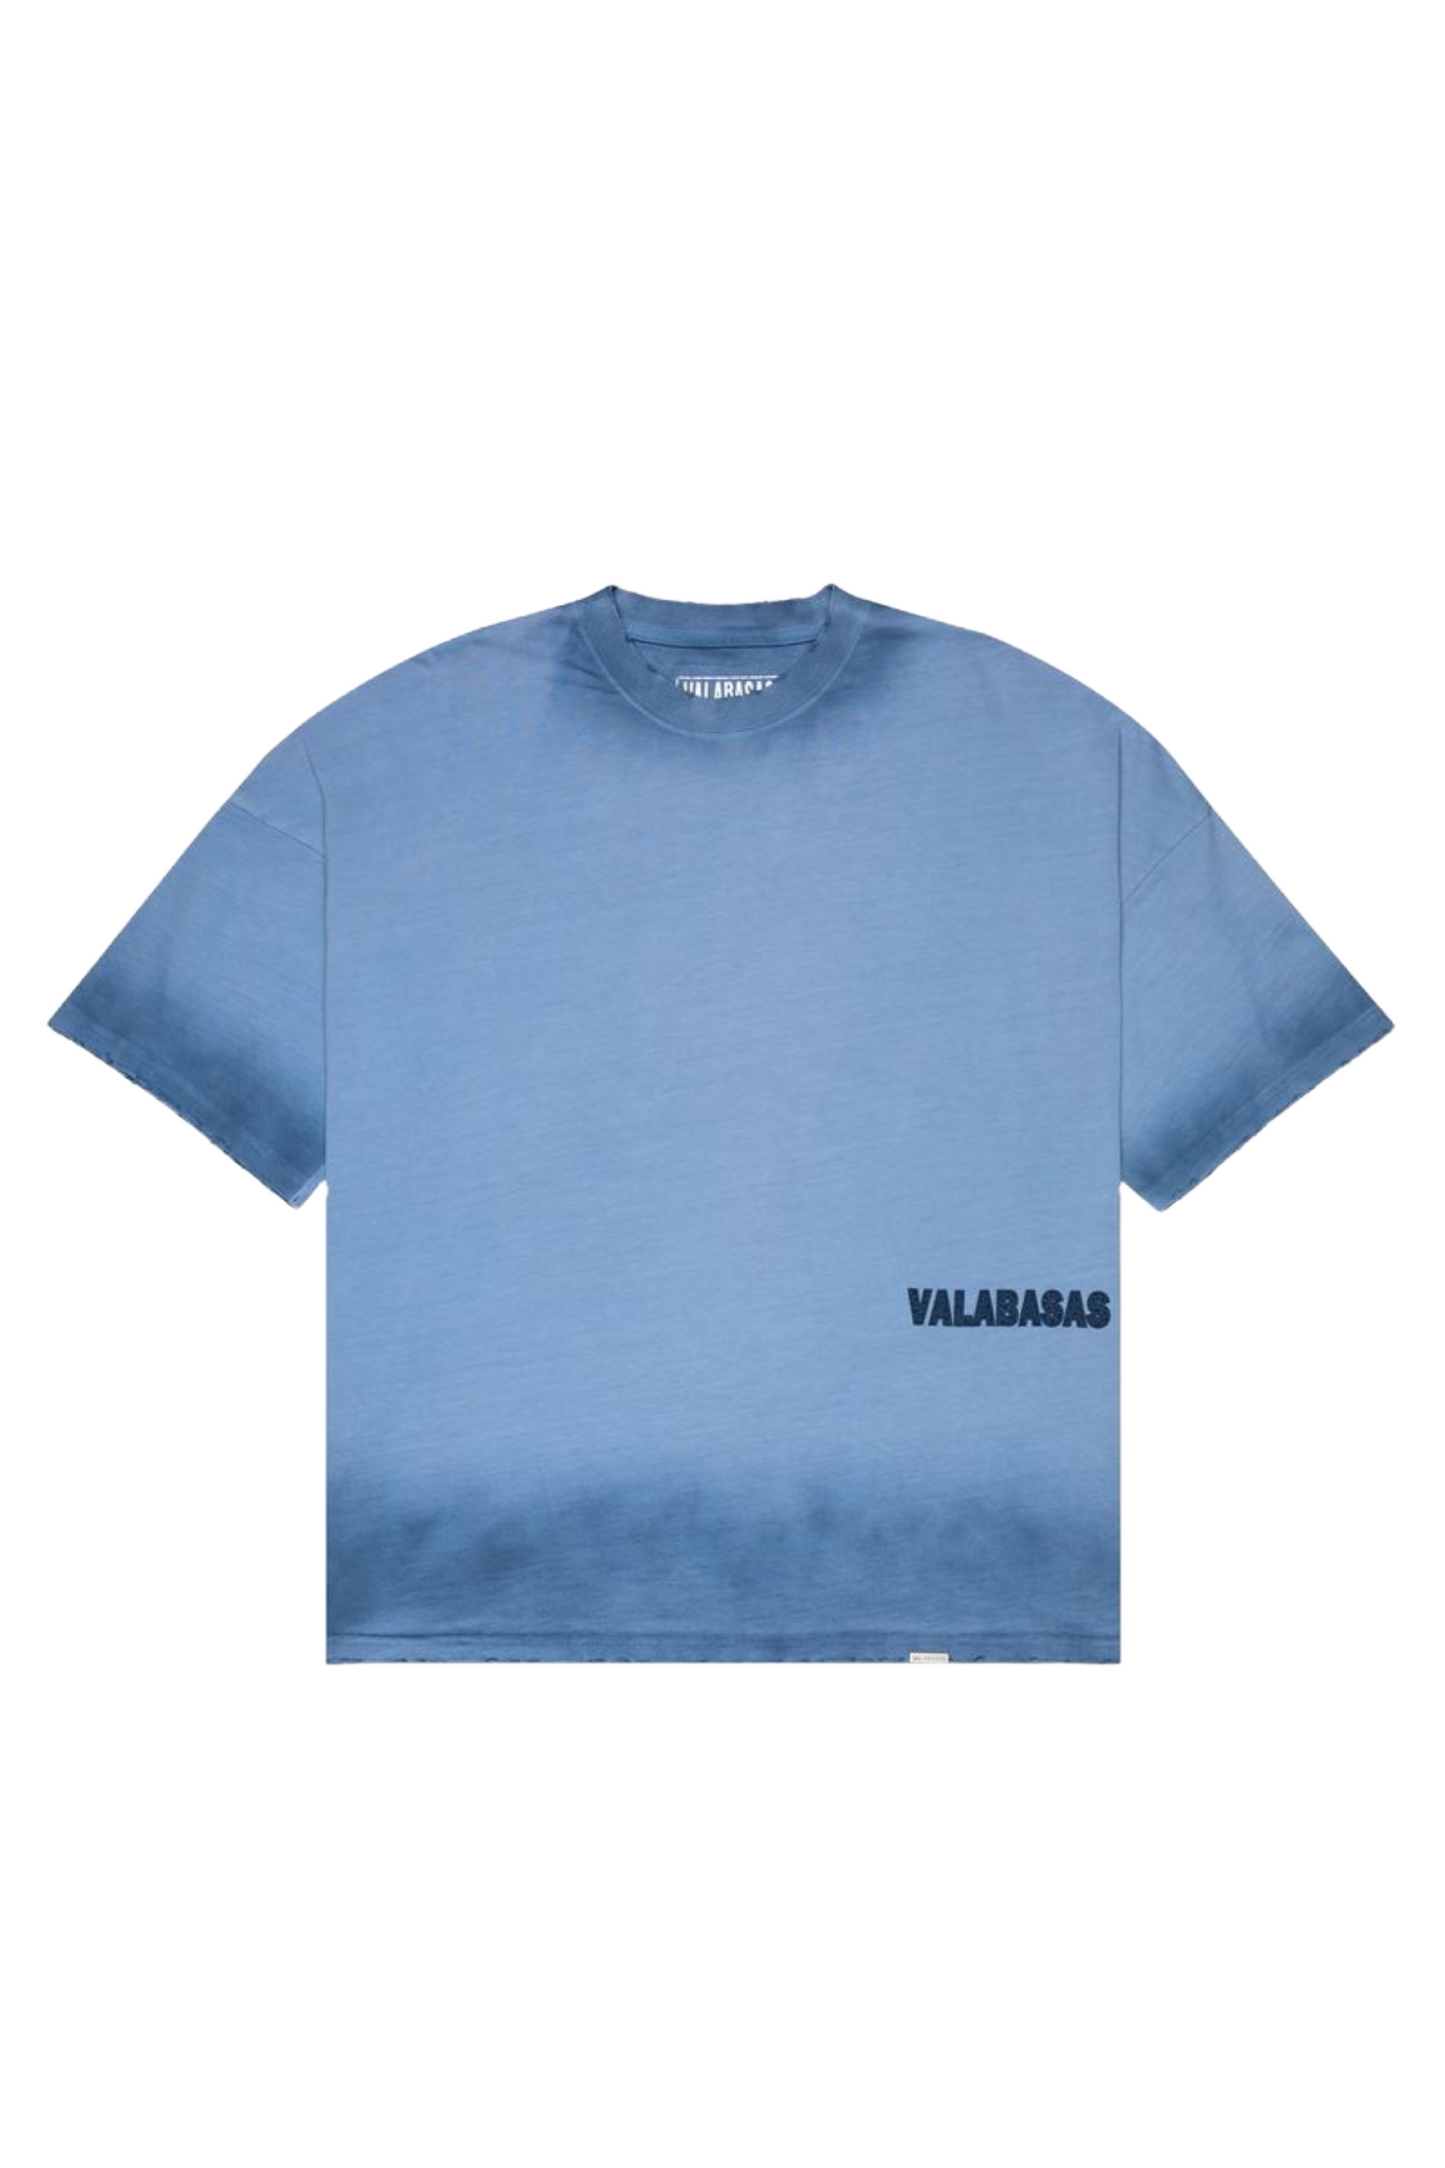 VALABASAS "VANGUARD" GRAY BLUE OVERSIZED TEE